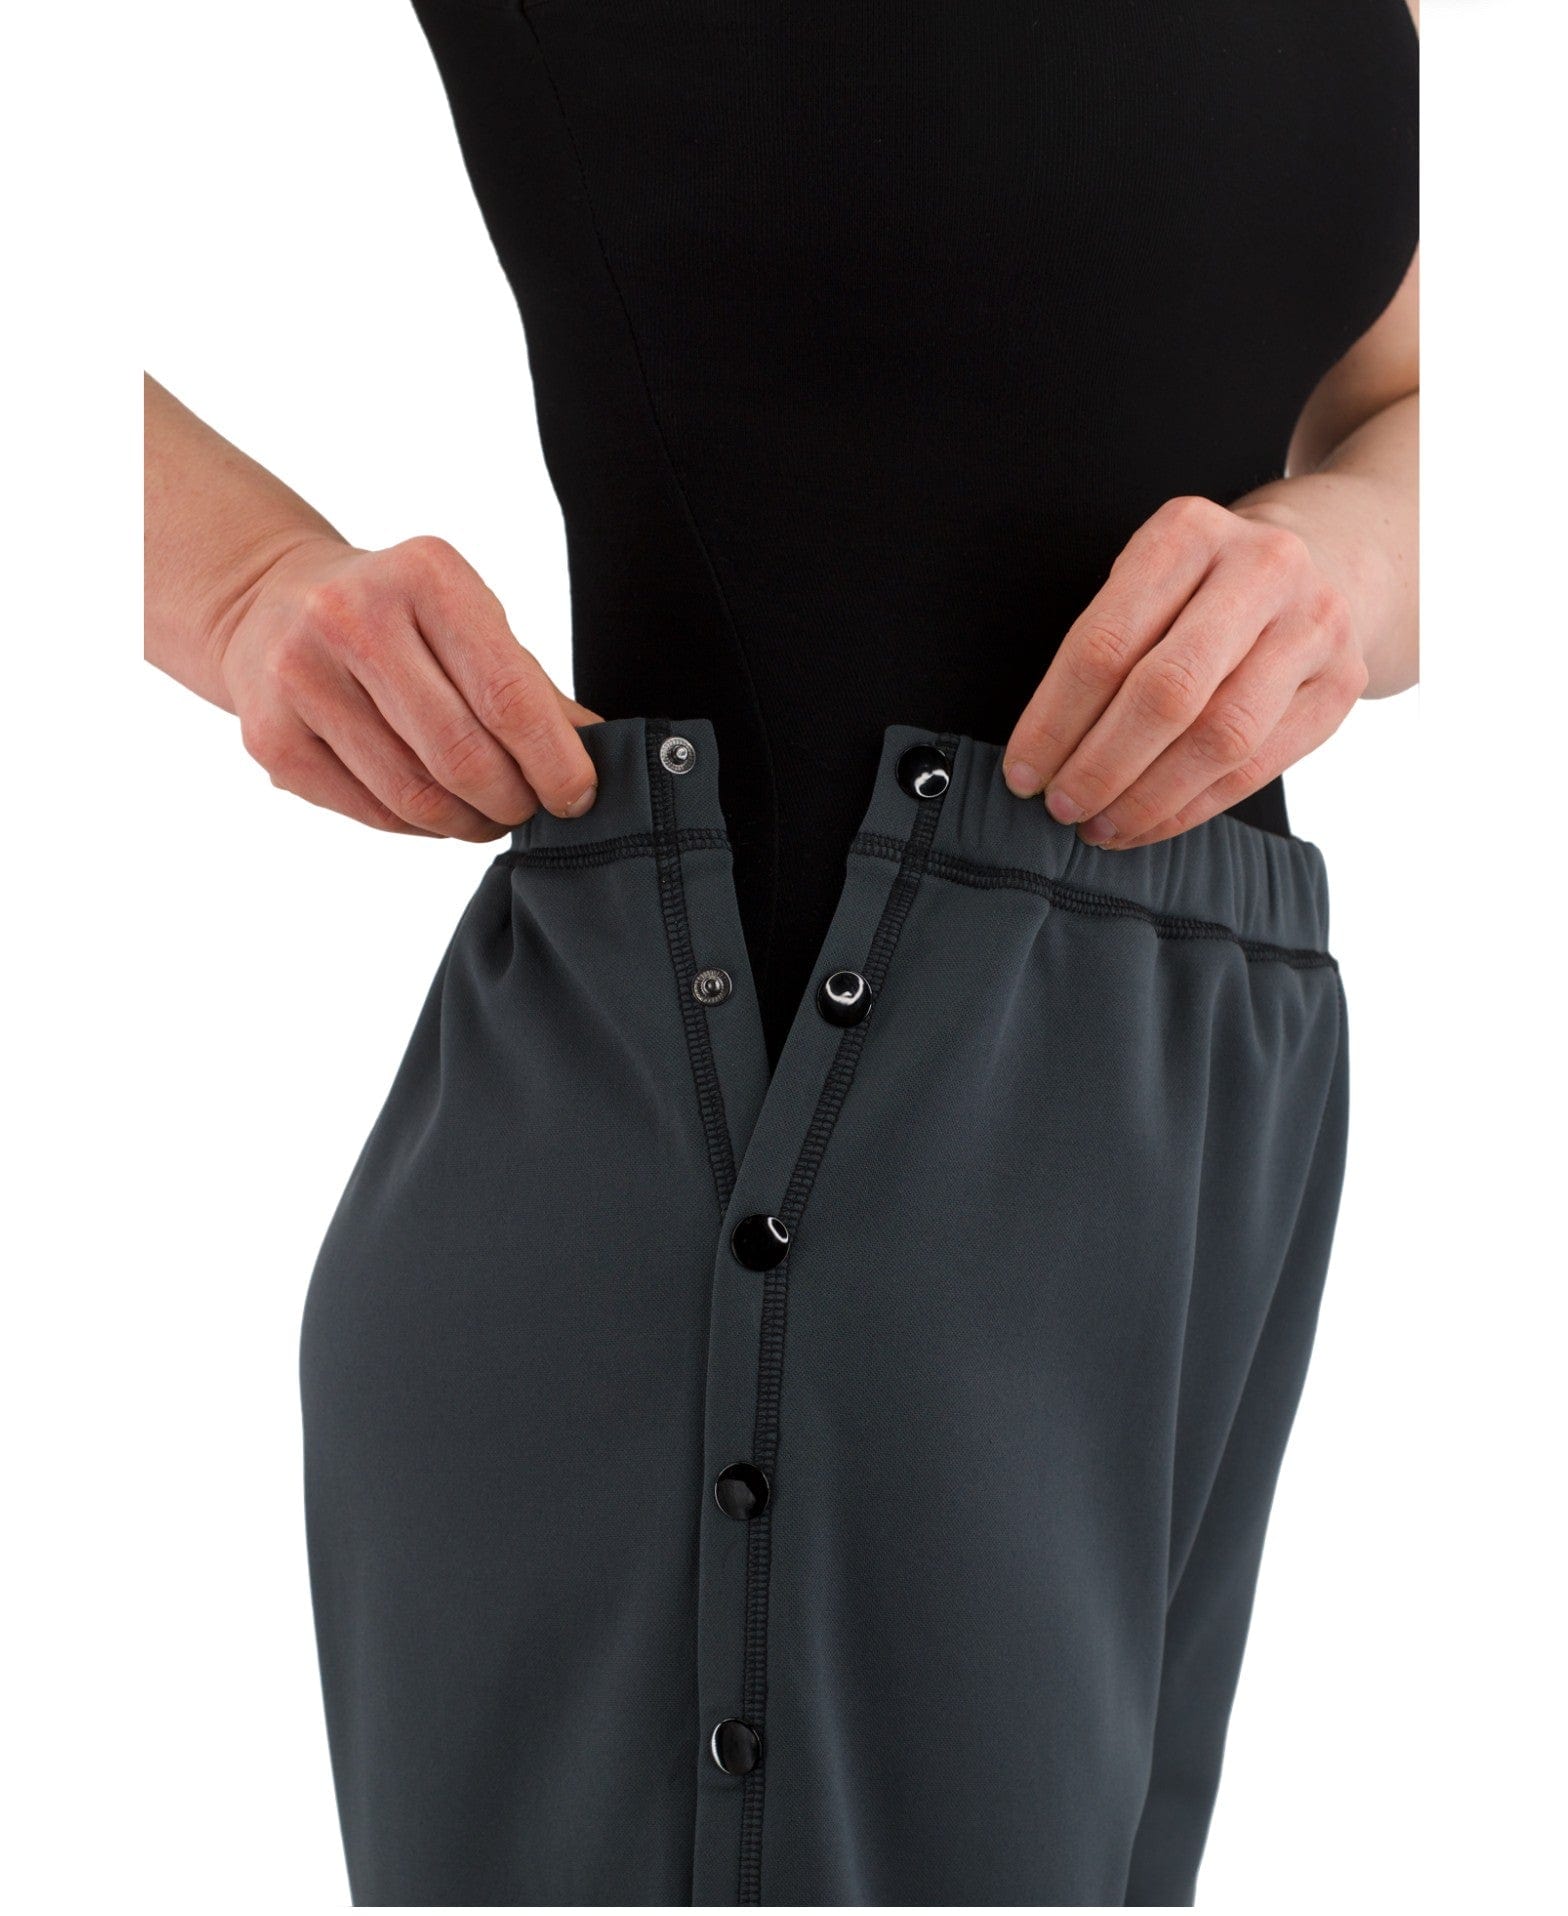 Post Surgery Tearaway Pants Men's Women's Unisex Sizing 